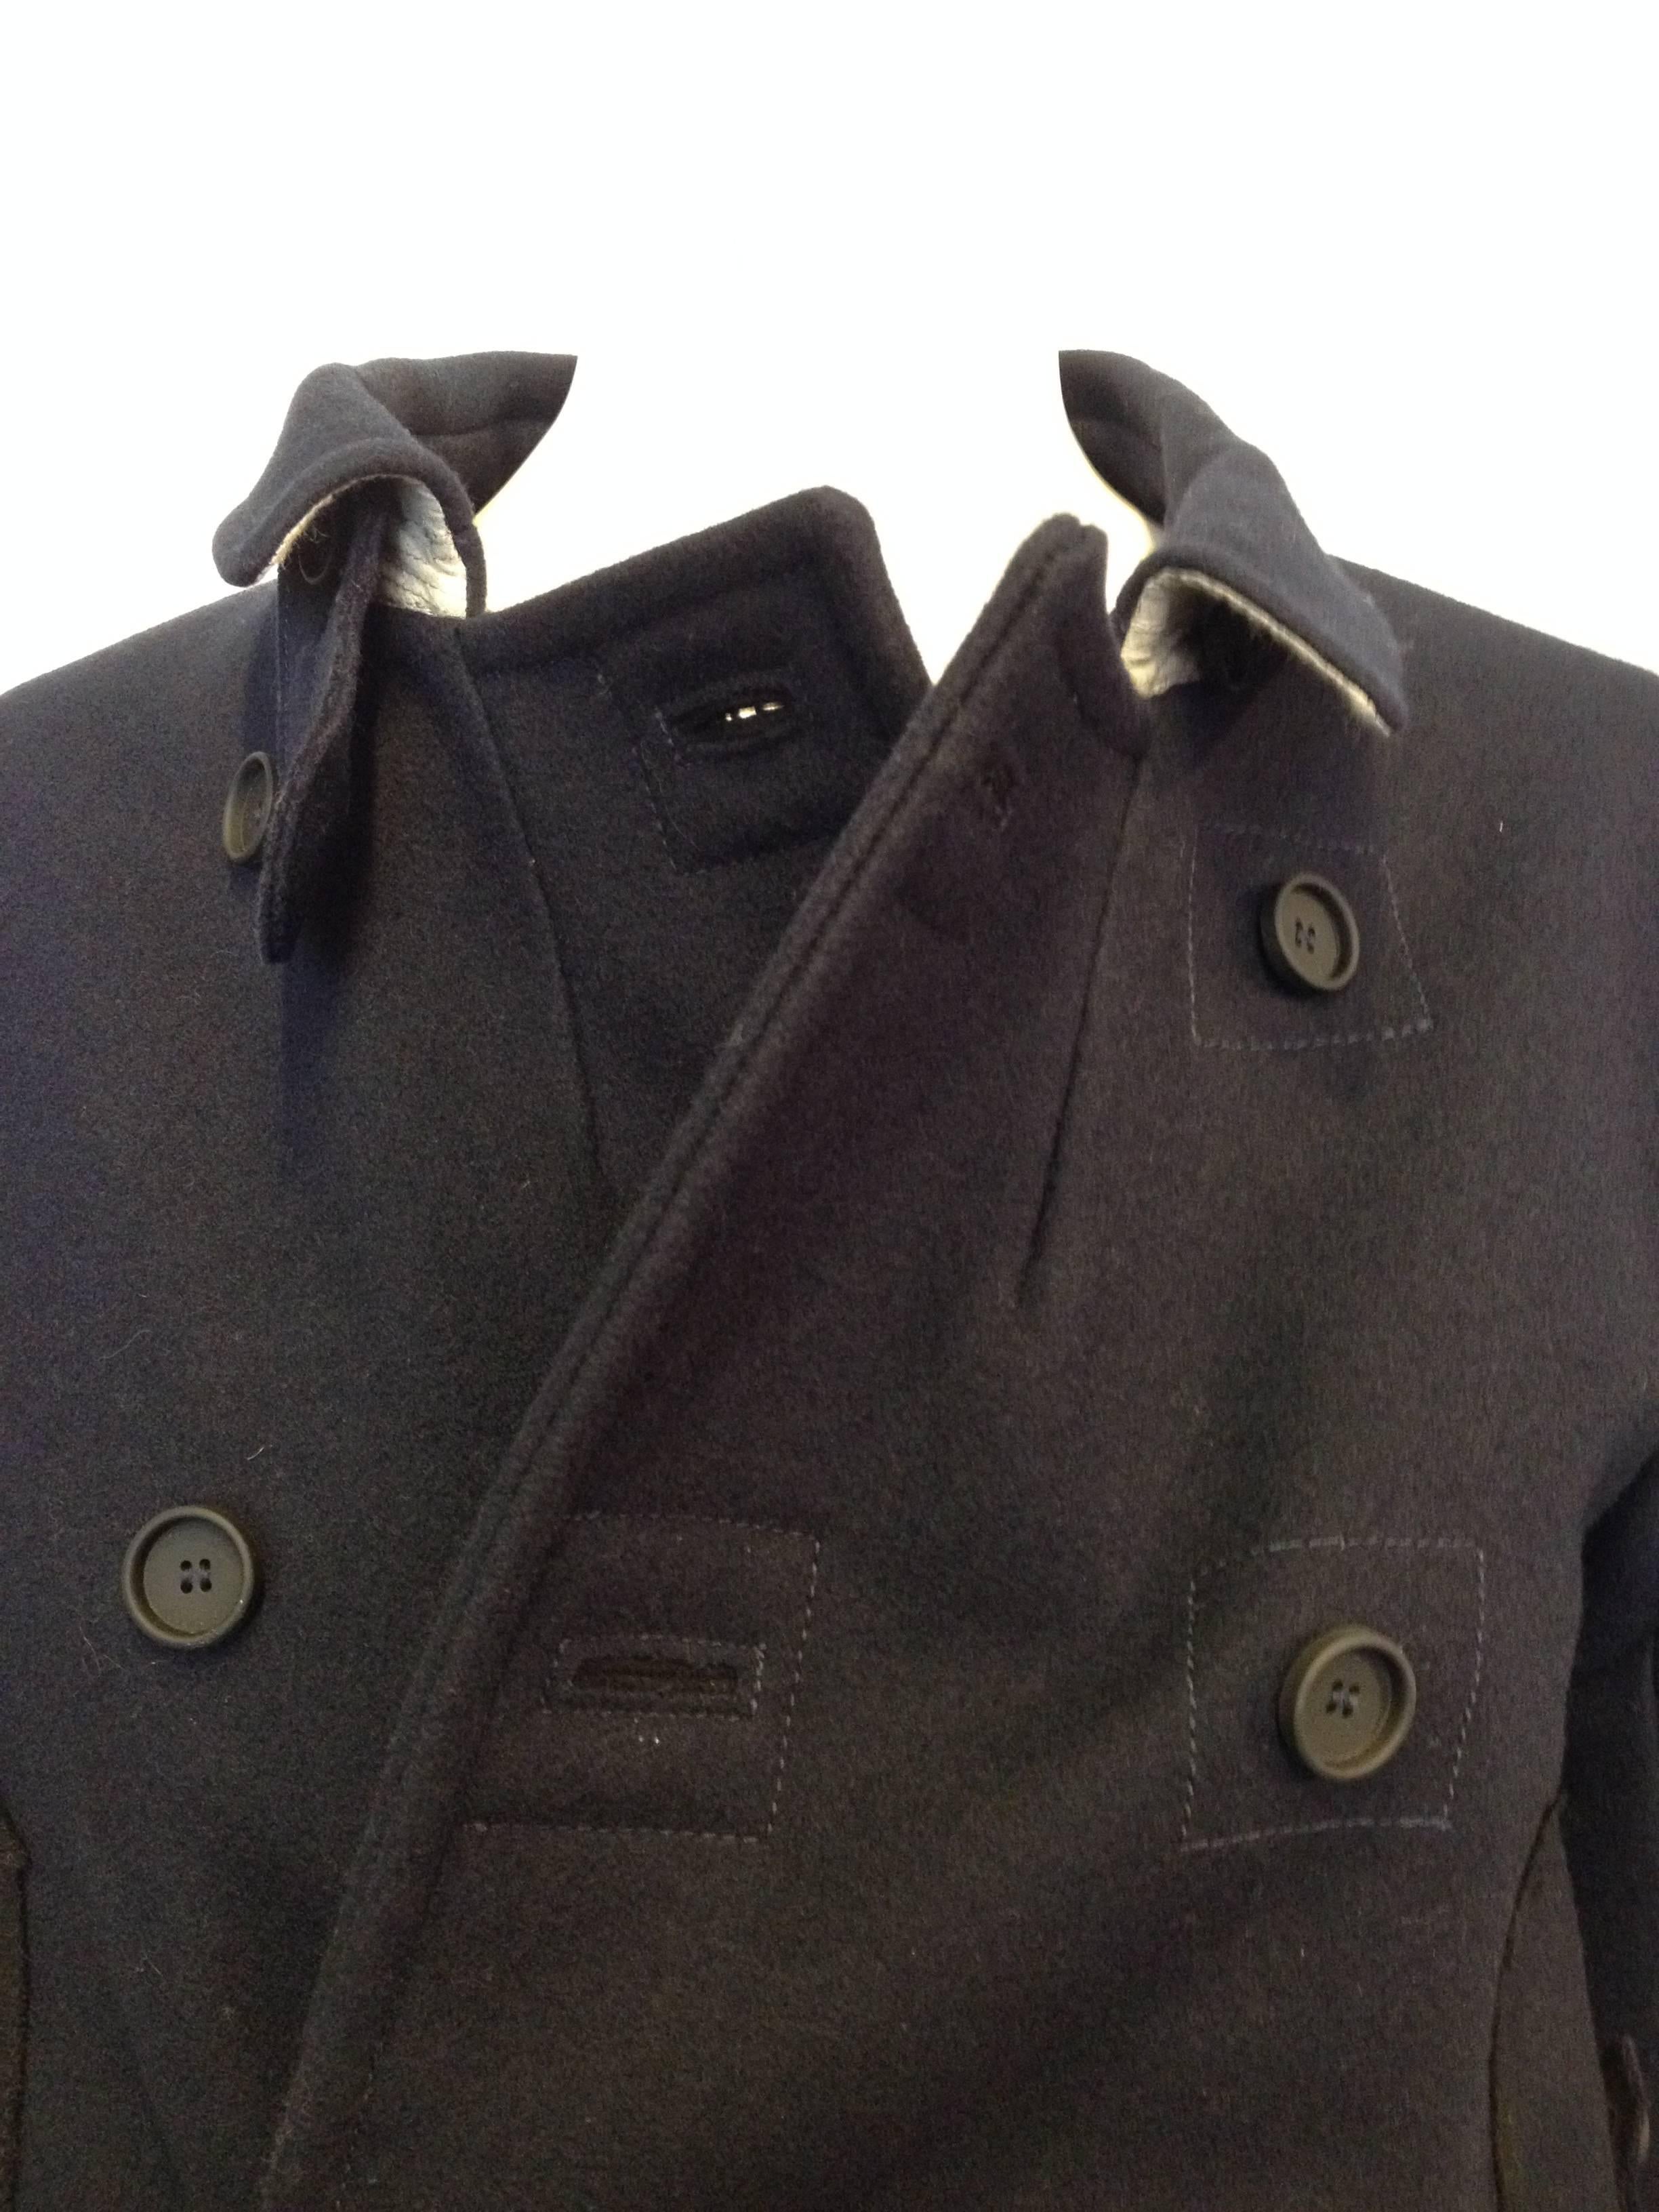 Women's Balenciaga Navy Wool Coat Size 38 (6)